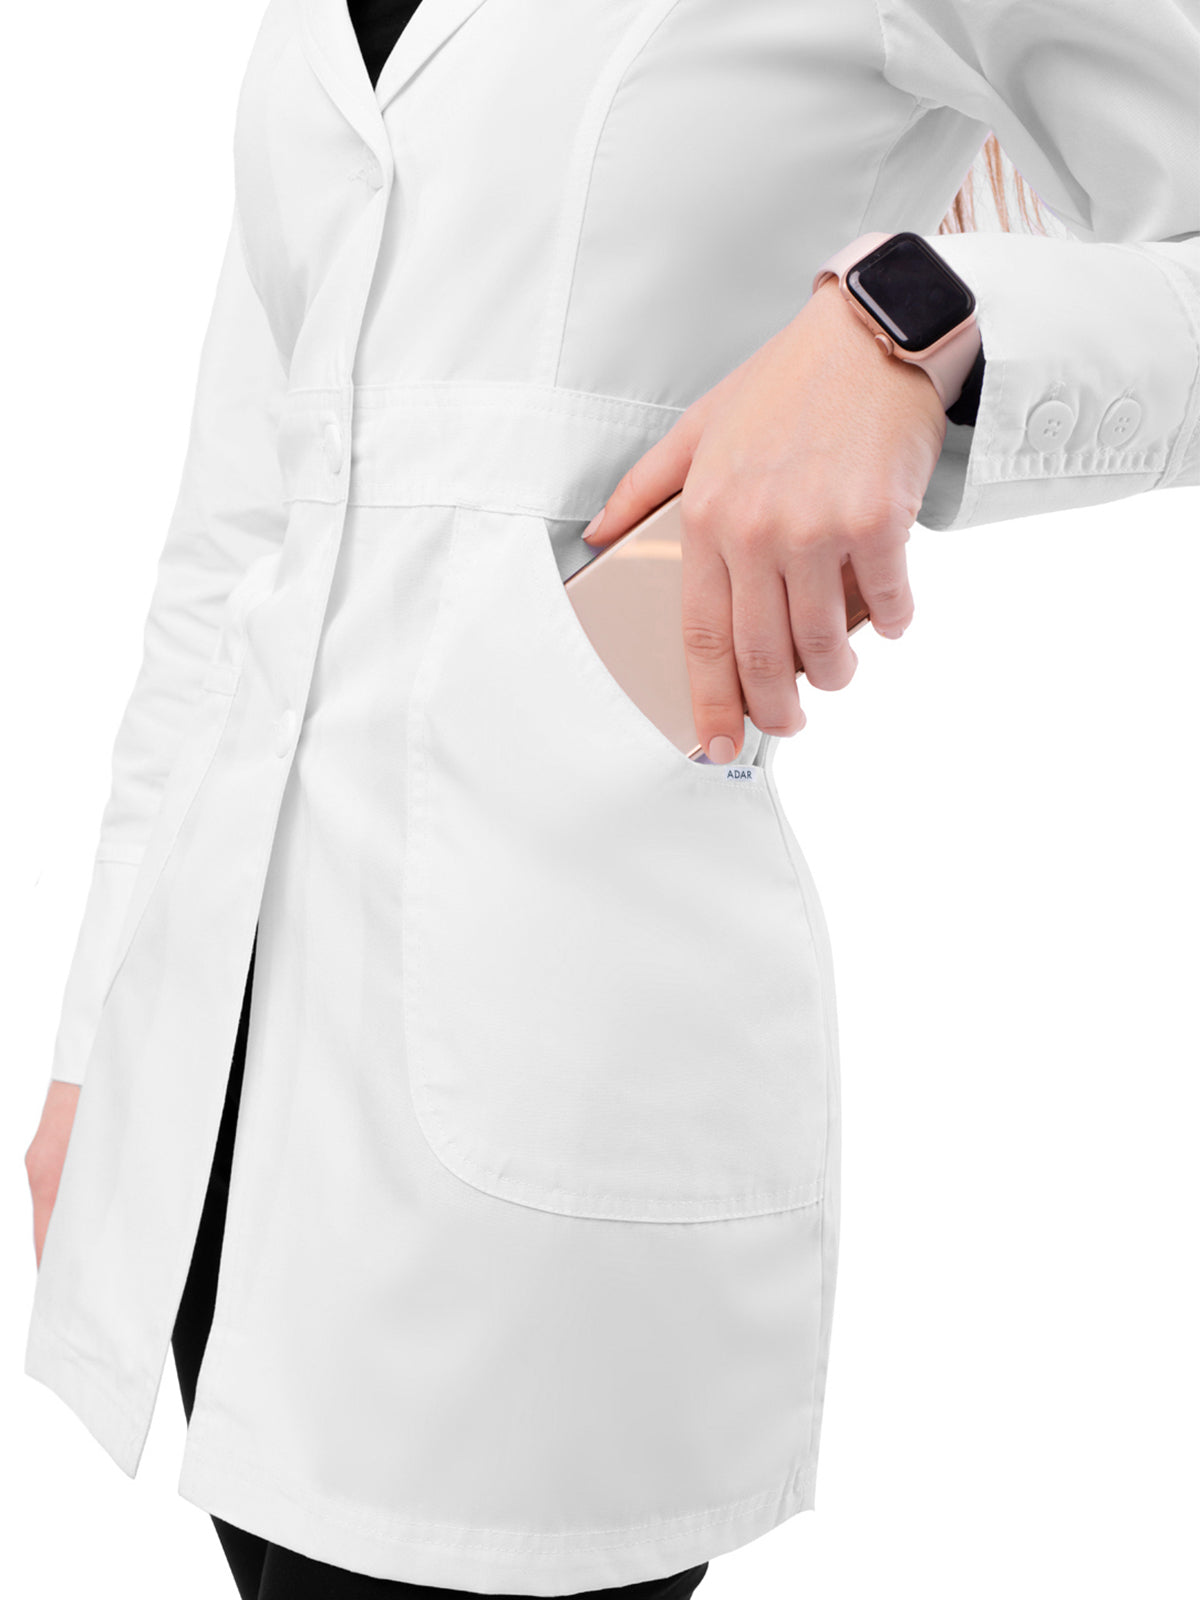 Women's Multi-Pocket 32" Perfection Lab Coat